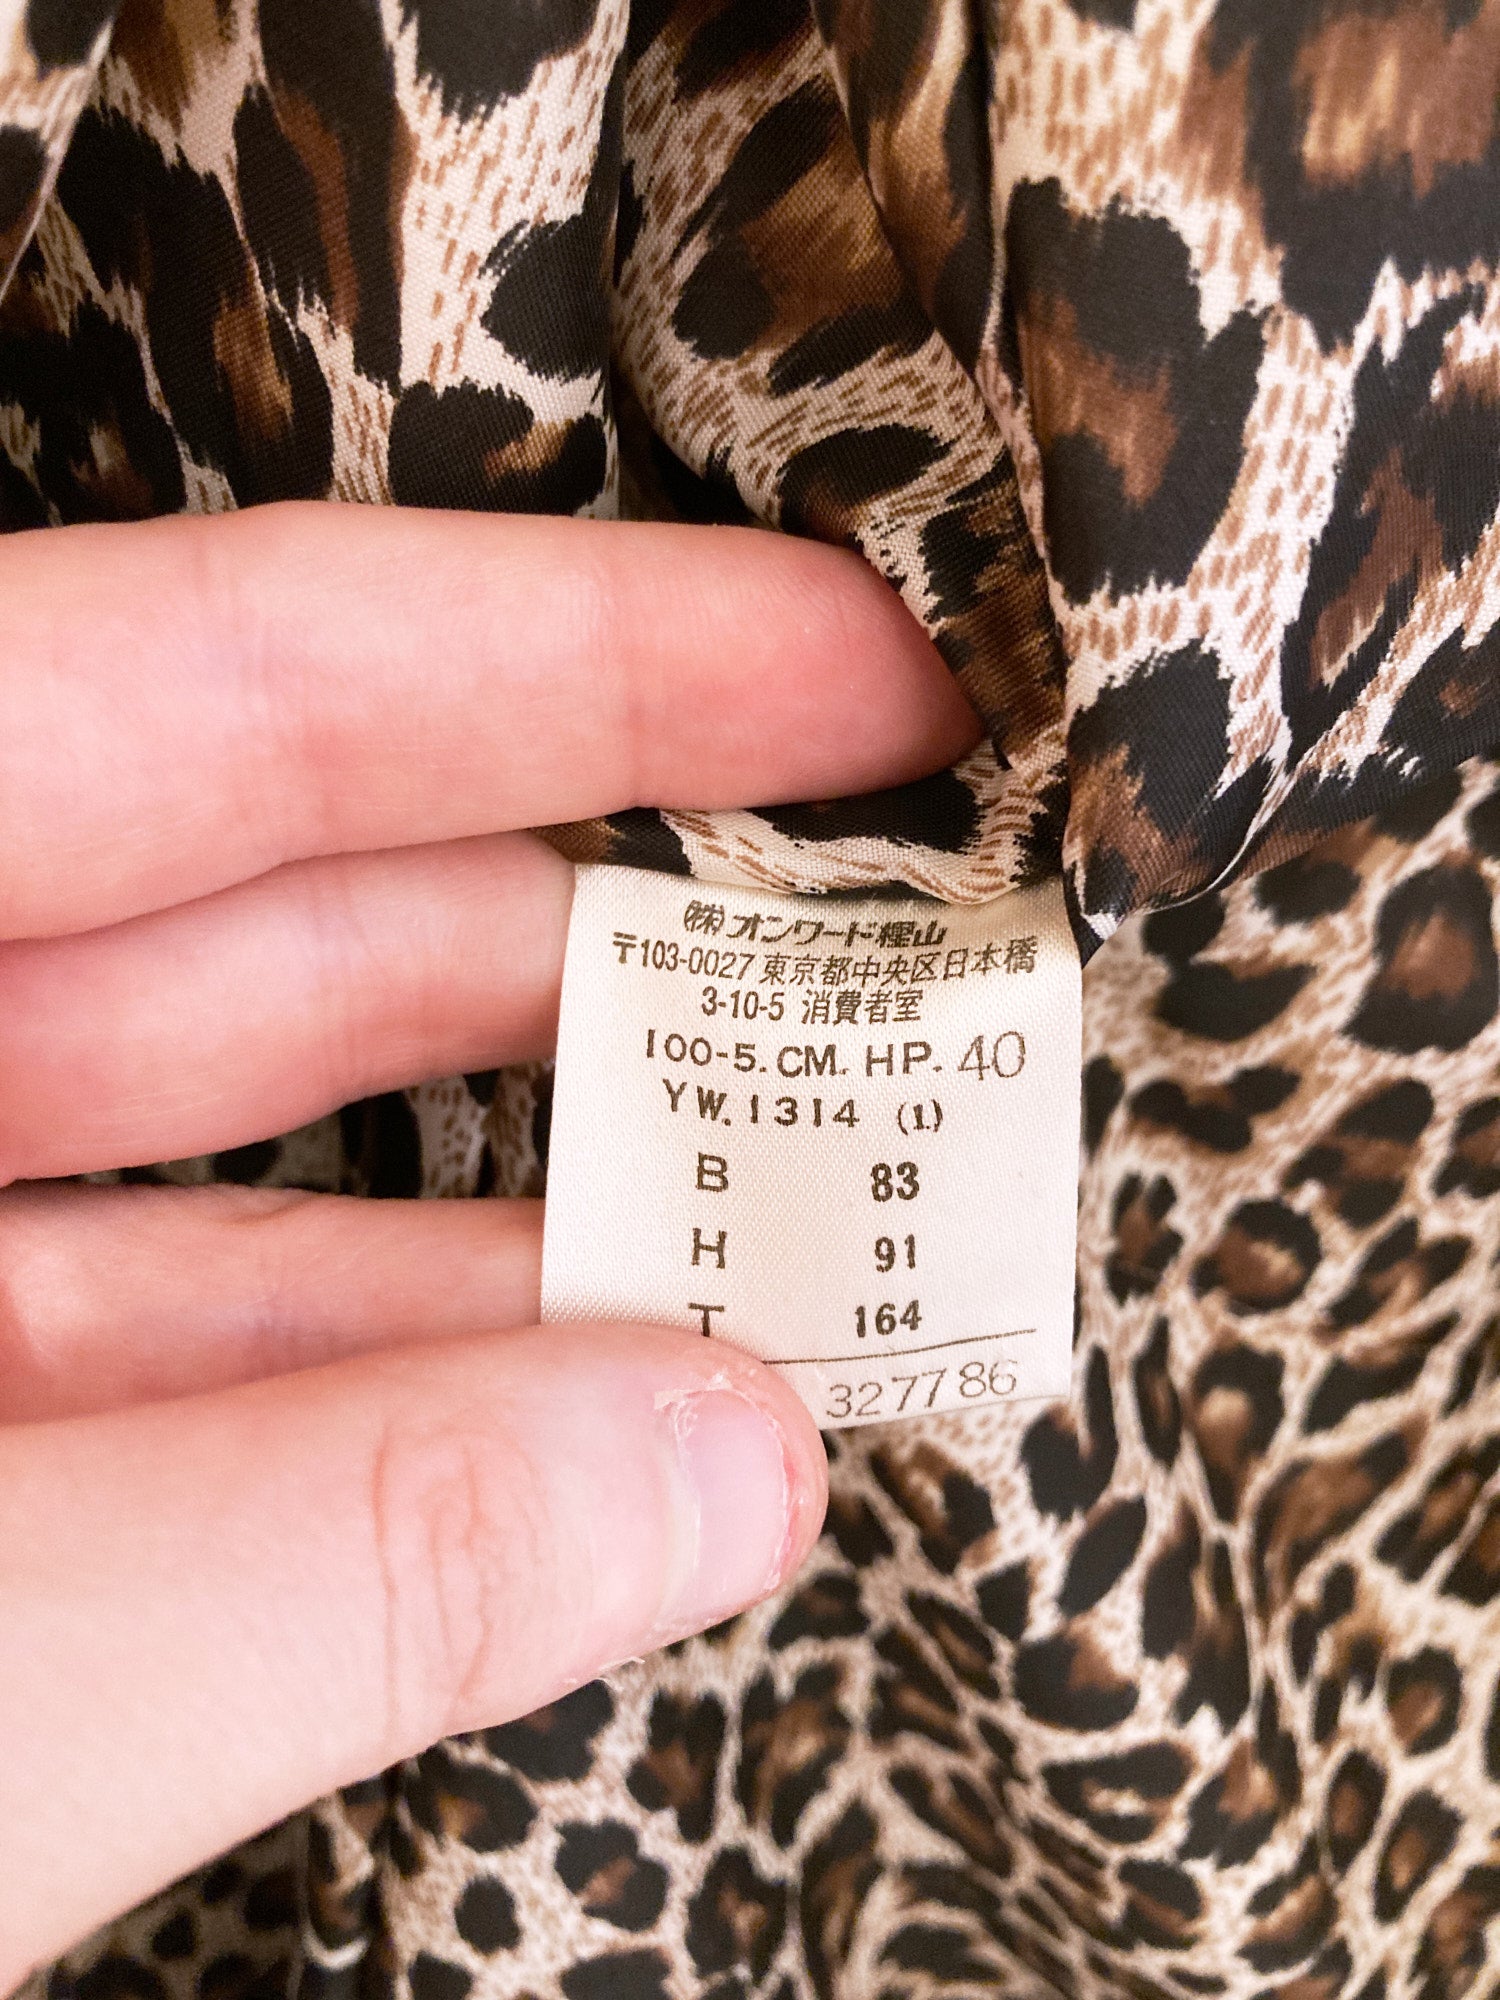 Portfolio by Jean Colonna cream nylon zip coat with leopard print lining